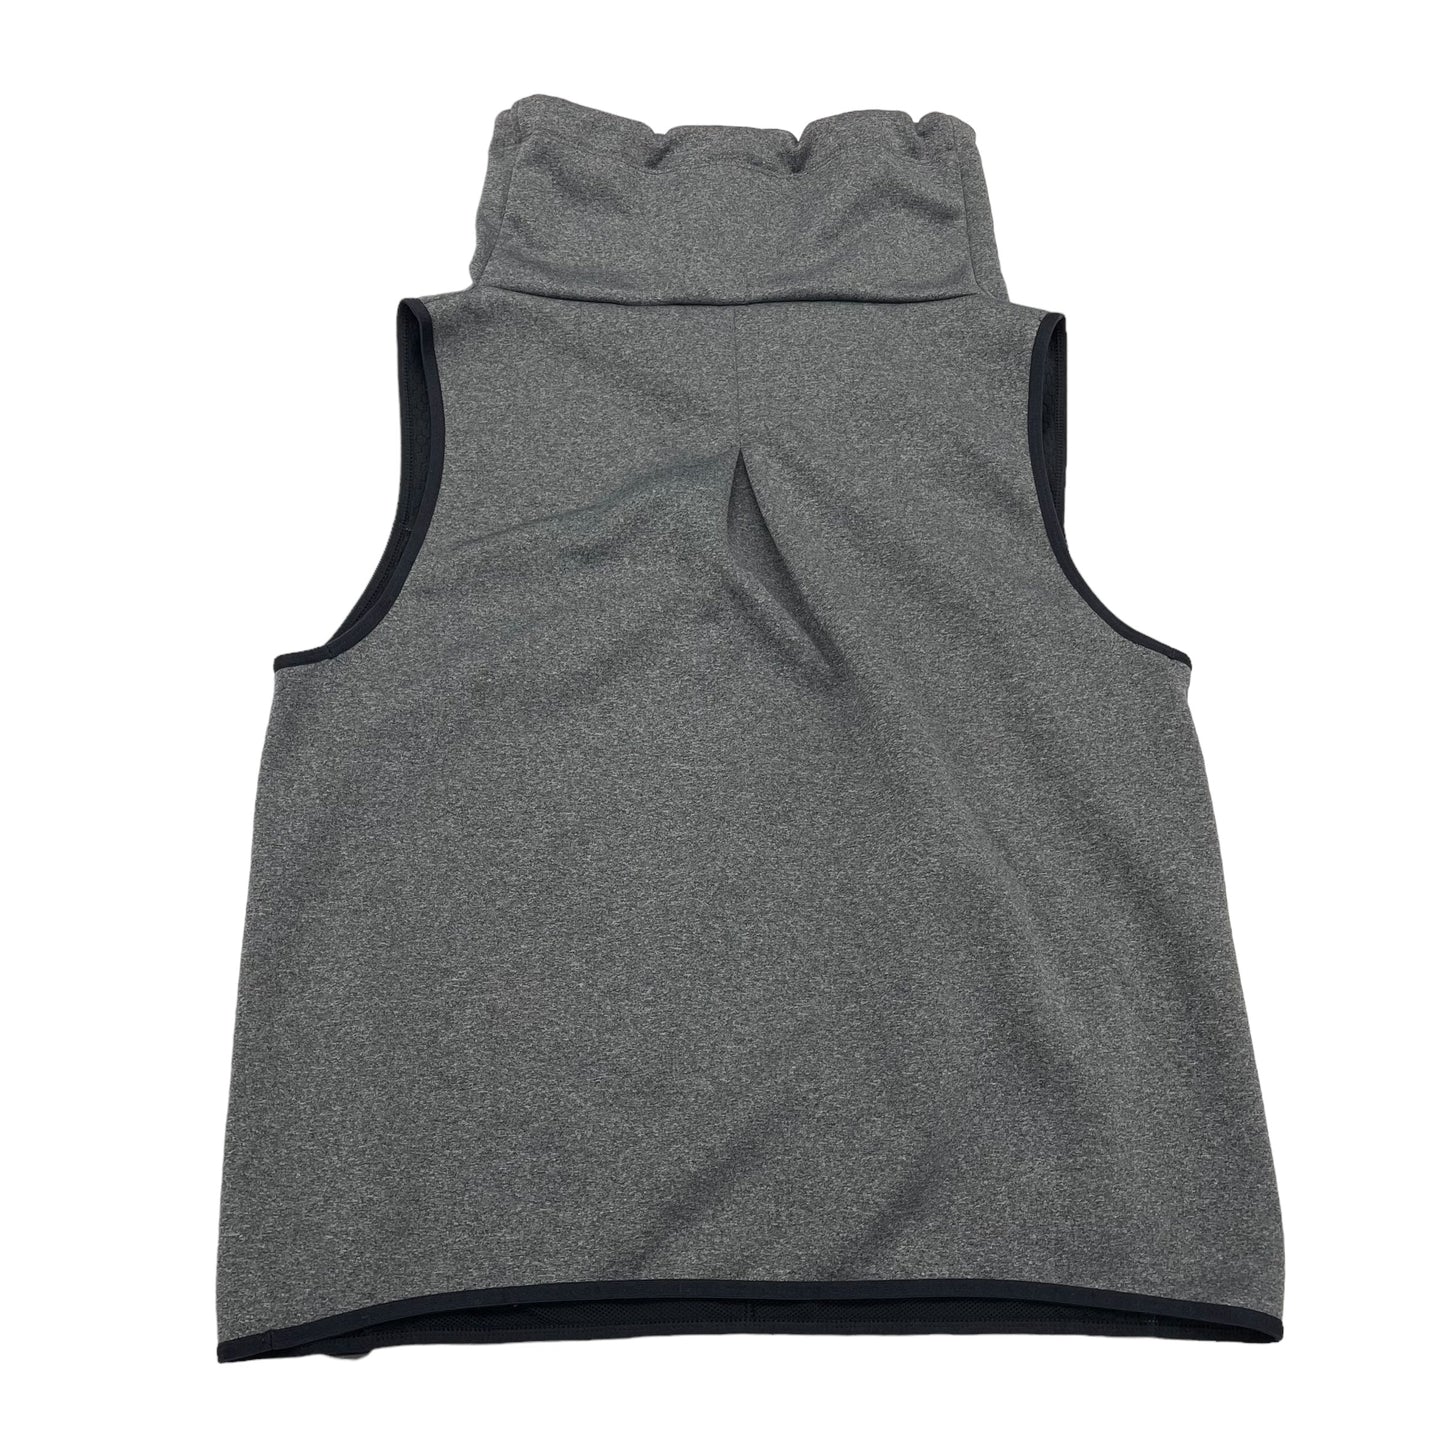 Grey Vest Other Nike Apparel, Size L